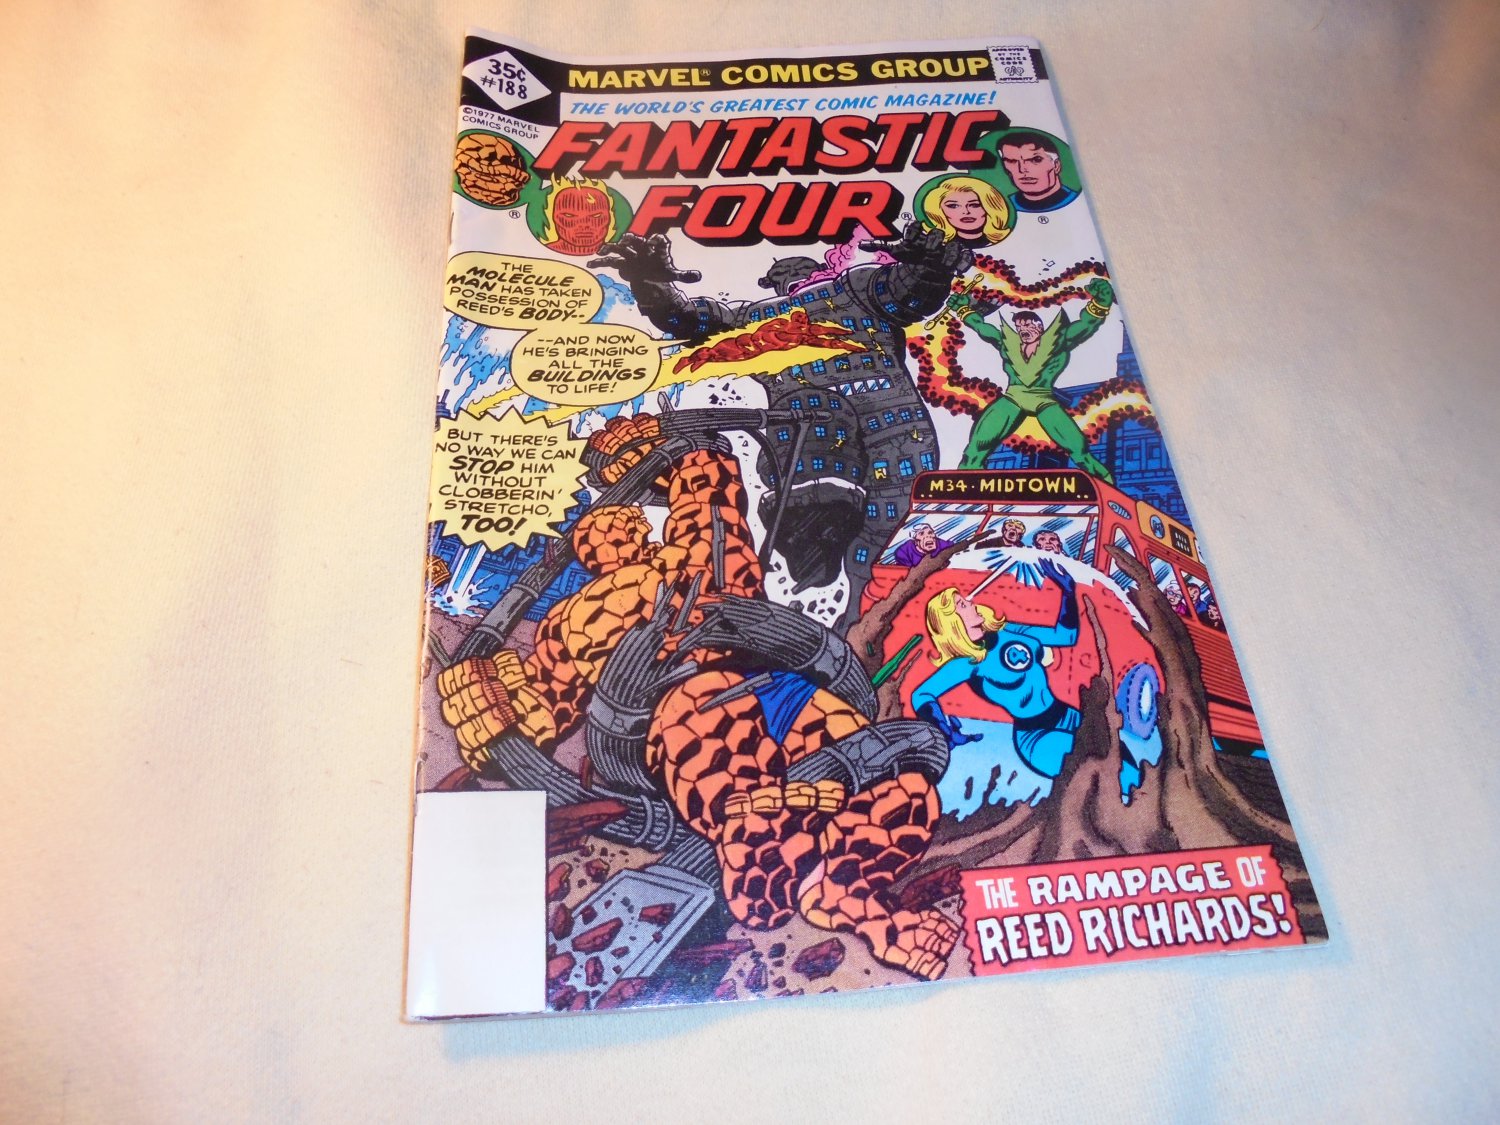 FANTASTIC FOUR # 188, George Perez Art! 1977, Marvel Comics! $6.00 OBO!